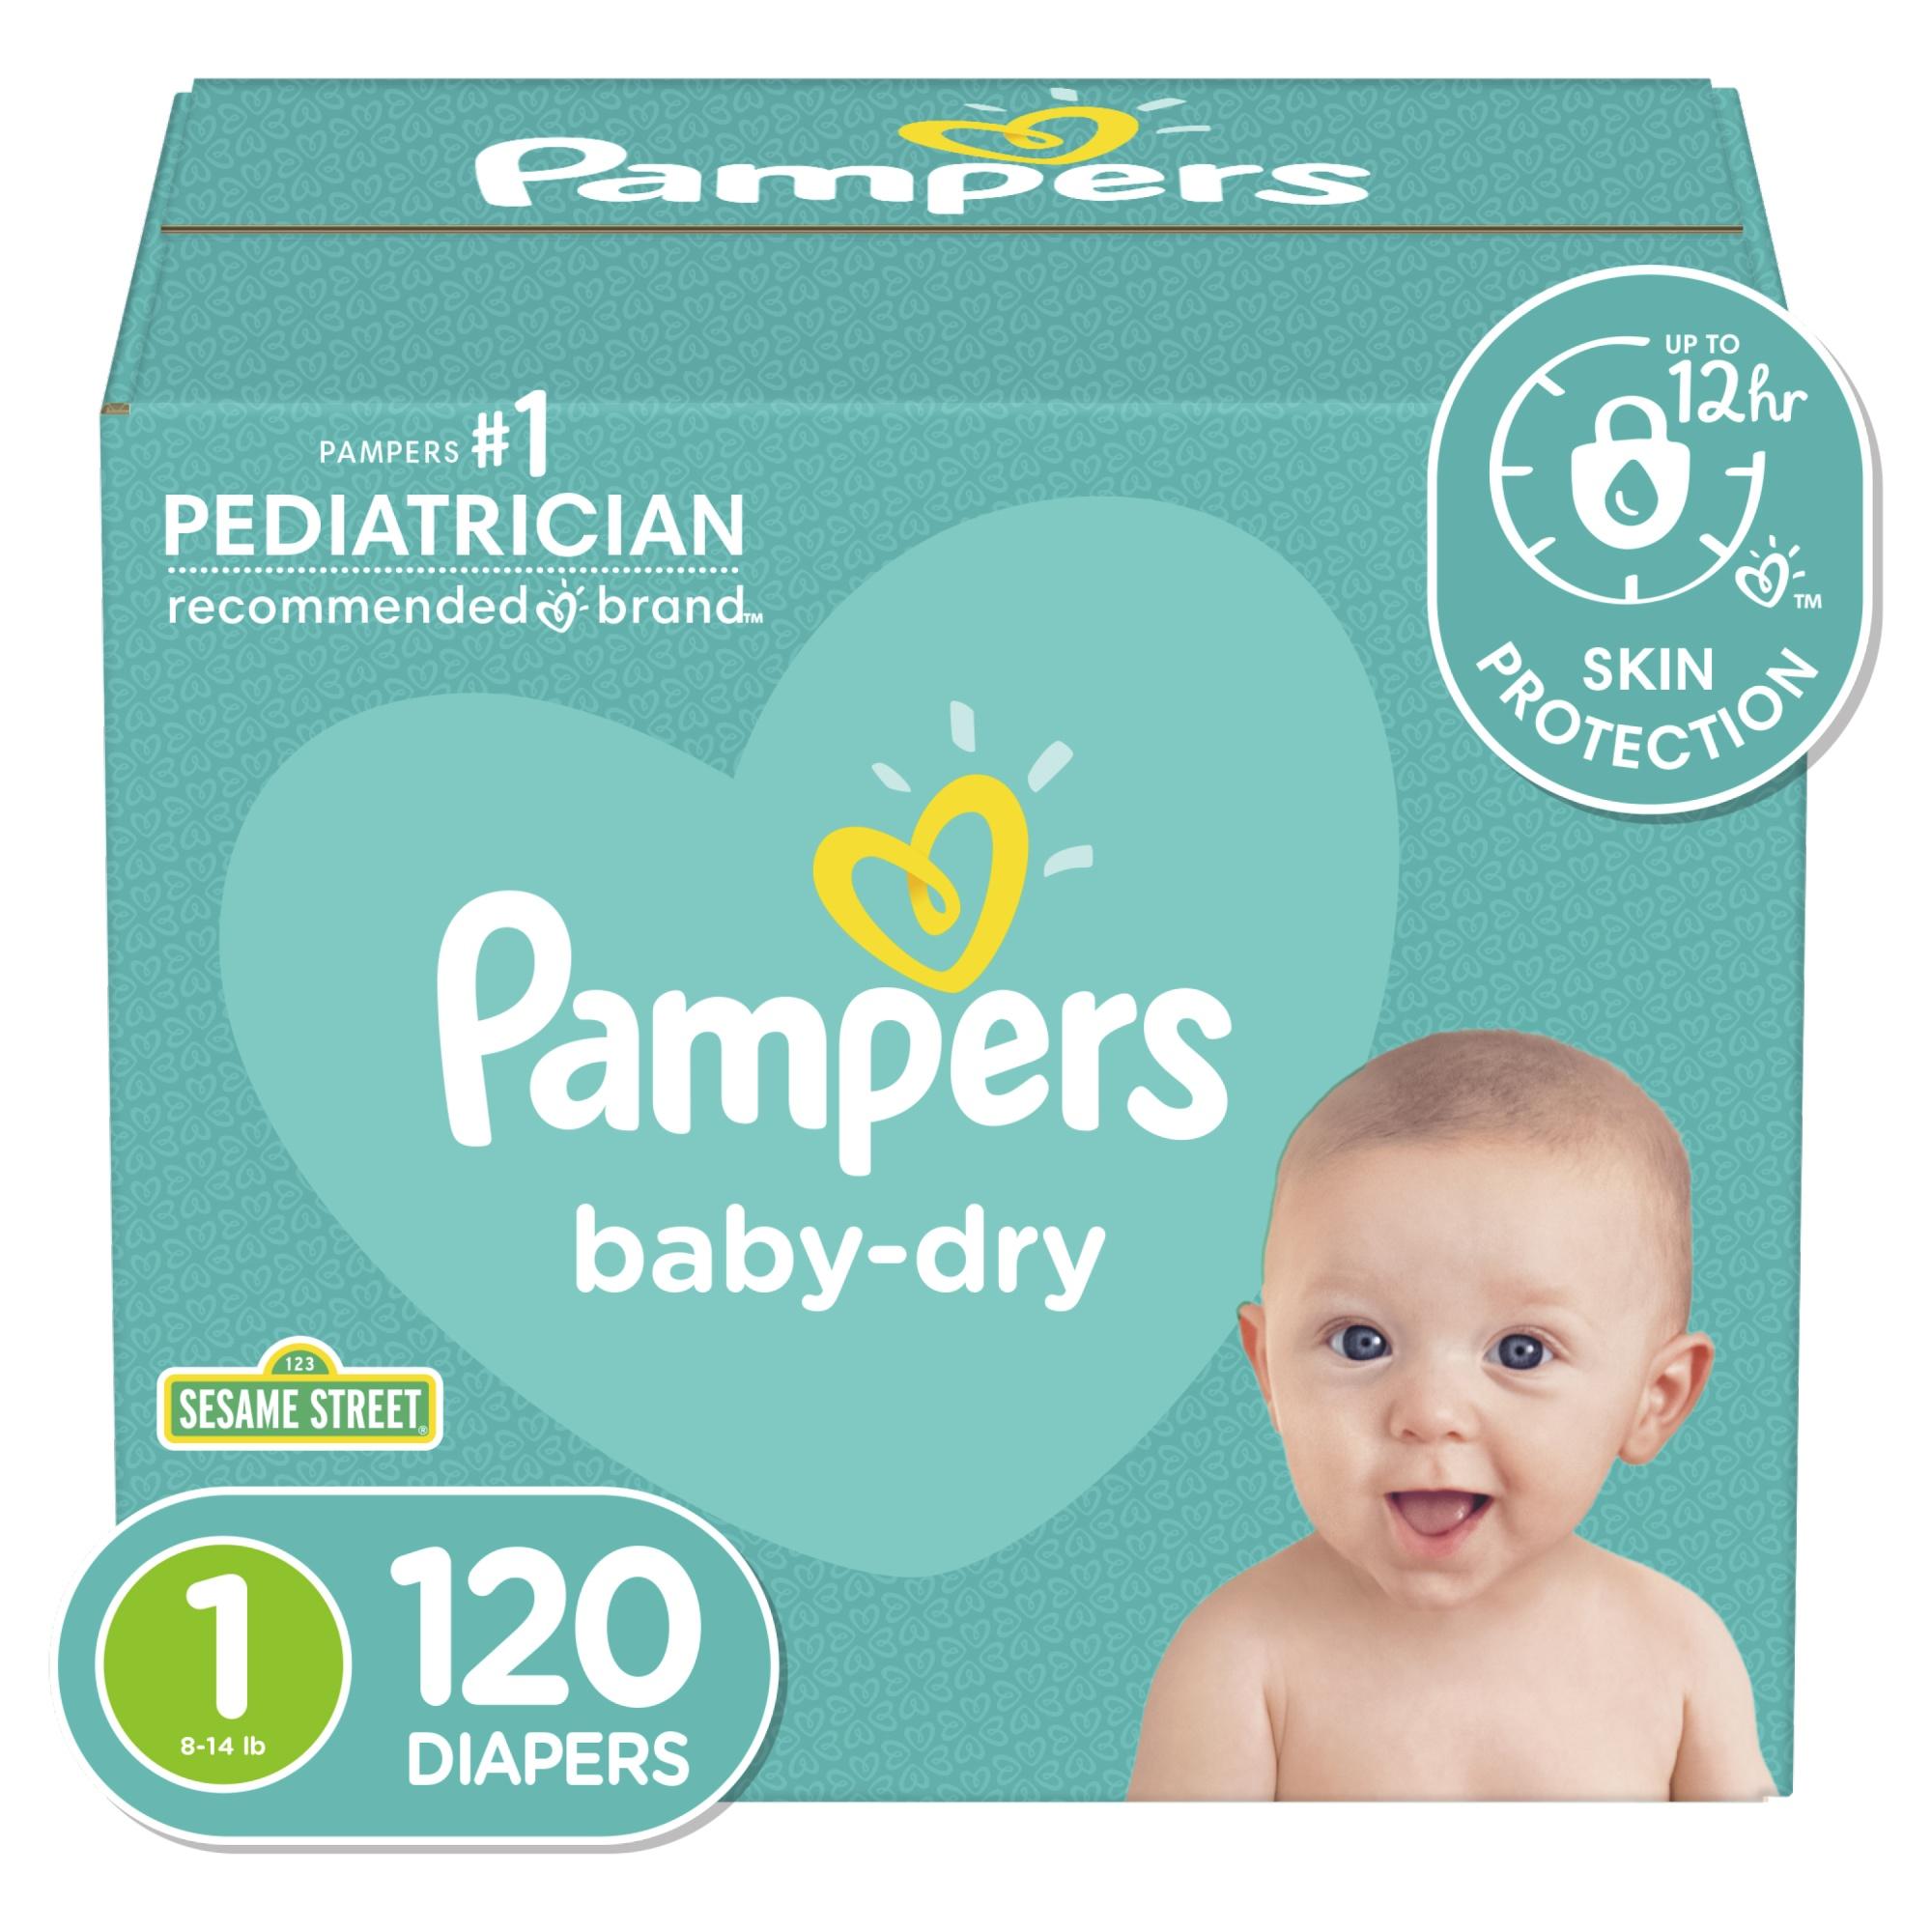 Comprar Pañales Pampers Baby-Dry, Talla 4 -92 Uds